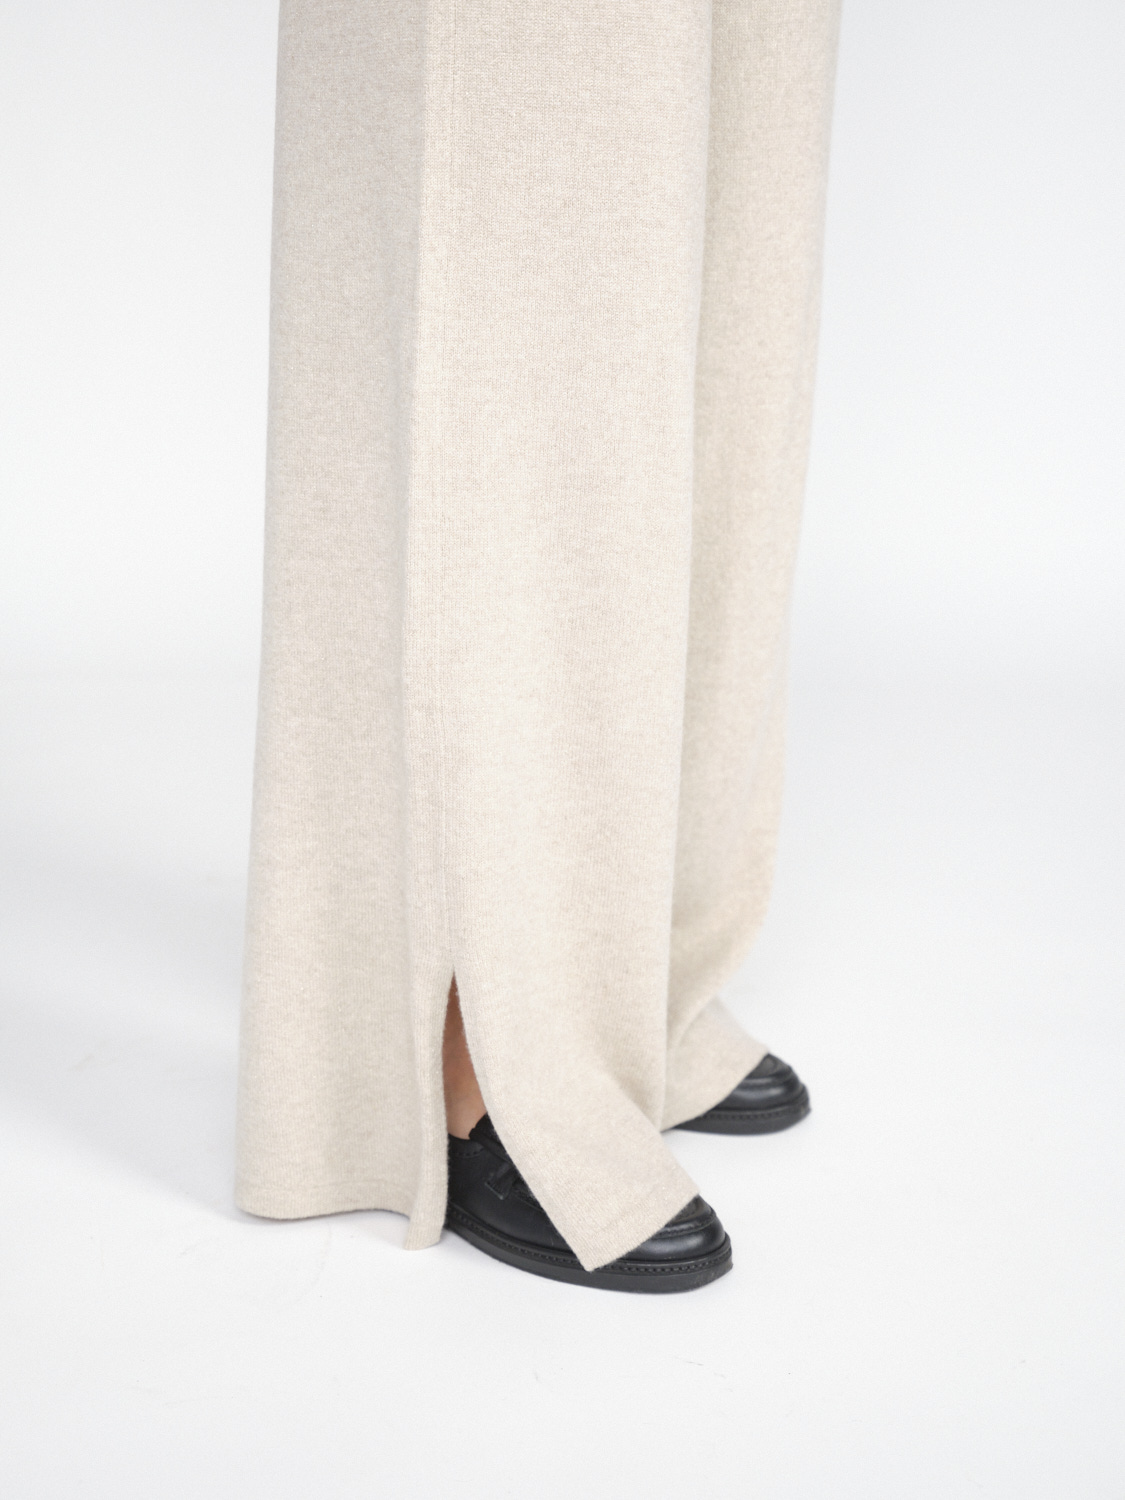 Lisa Yang Marlo - Pantalon en cachemire avec effets scintillants beige XS/S